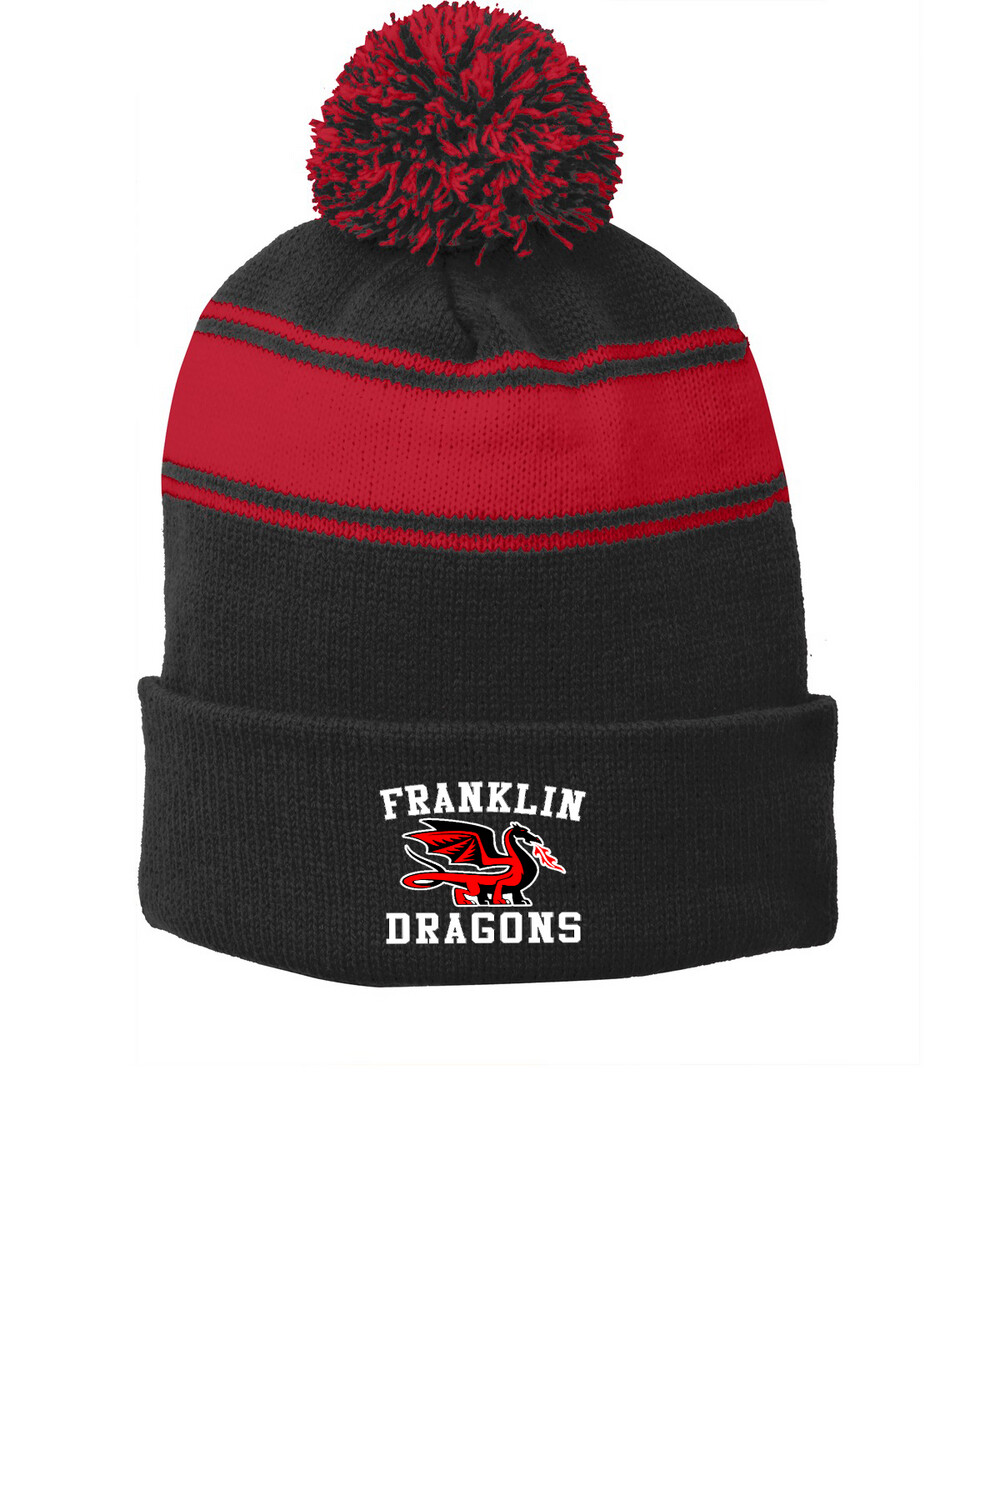 Franklin Winter Hat